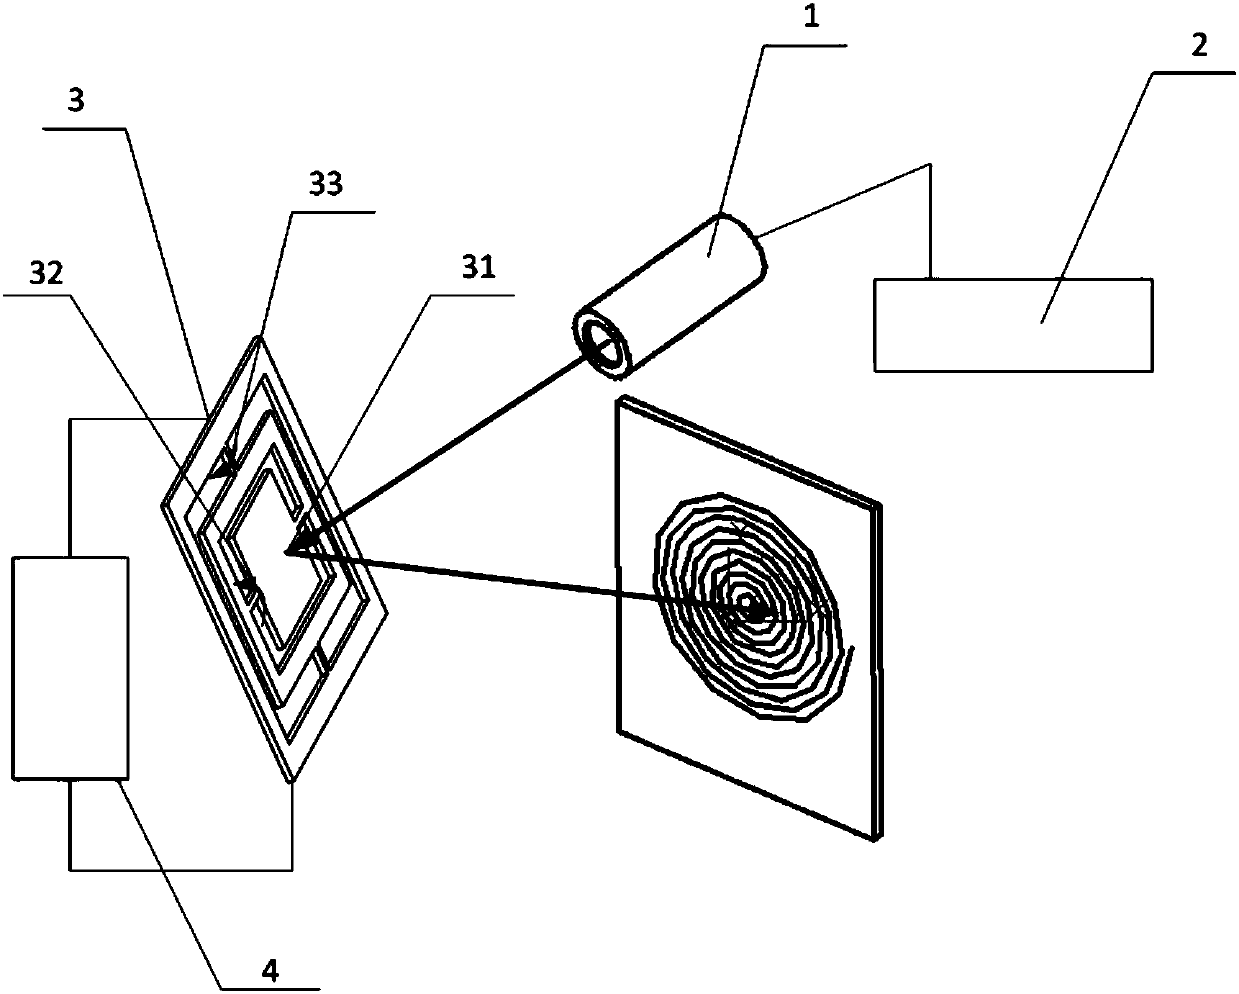 Vibrating mirror-based spiral scanning laser projection method and system